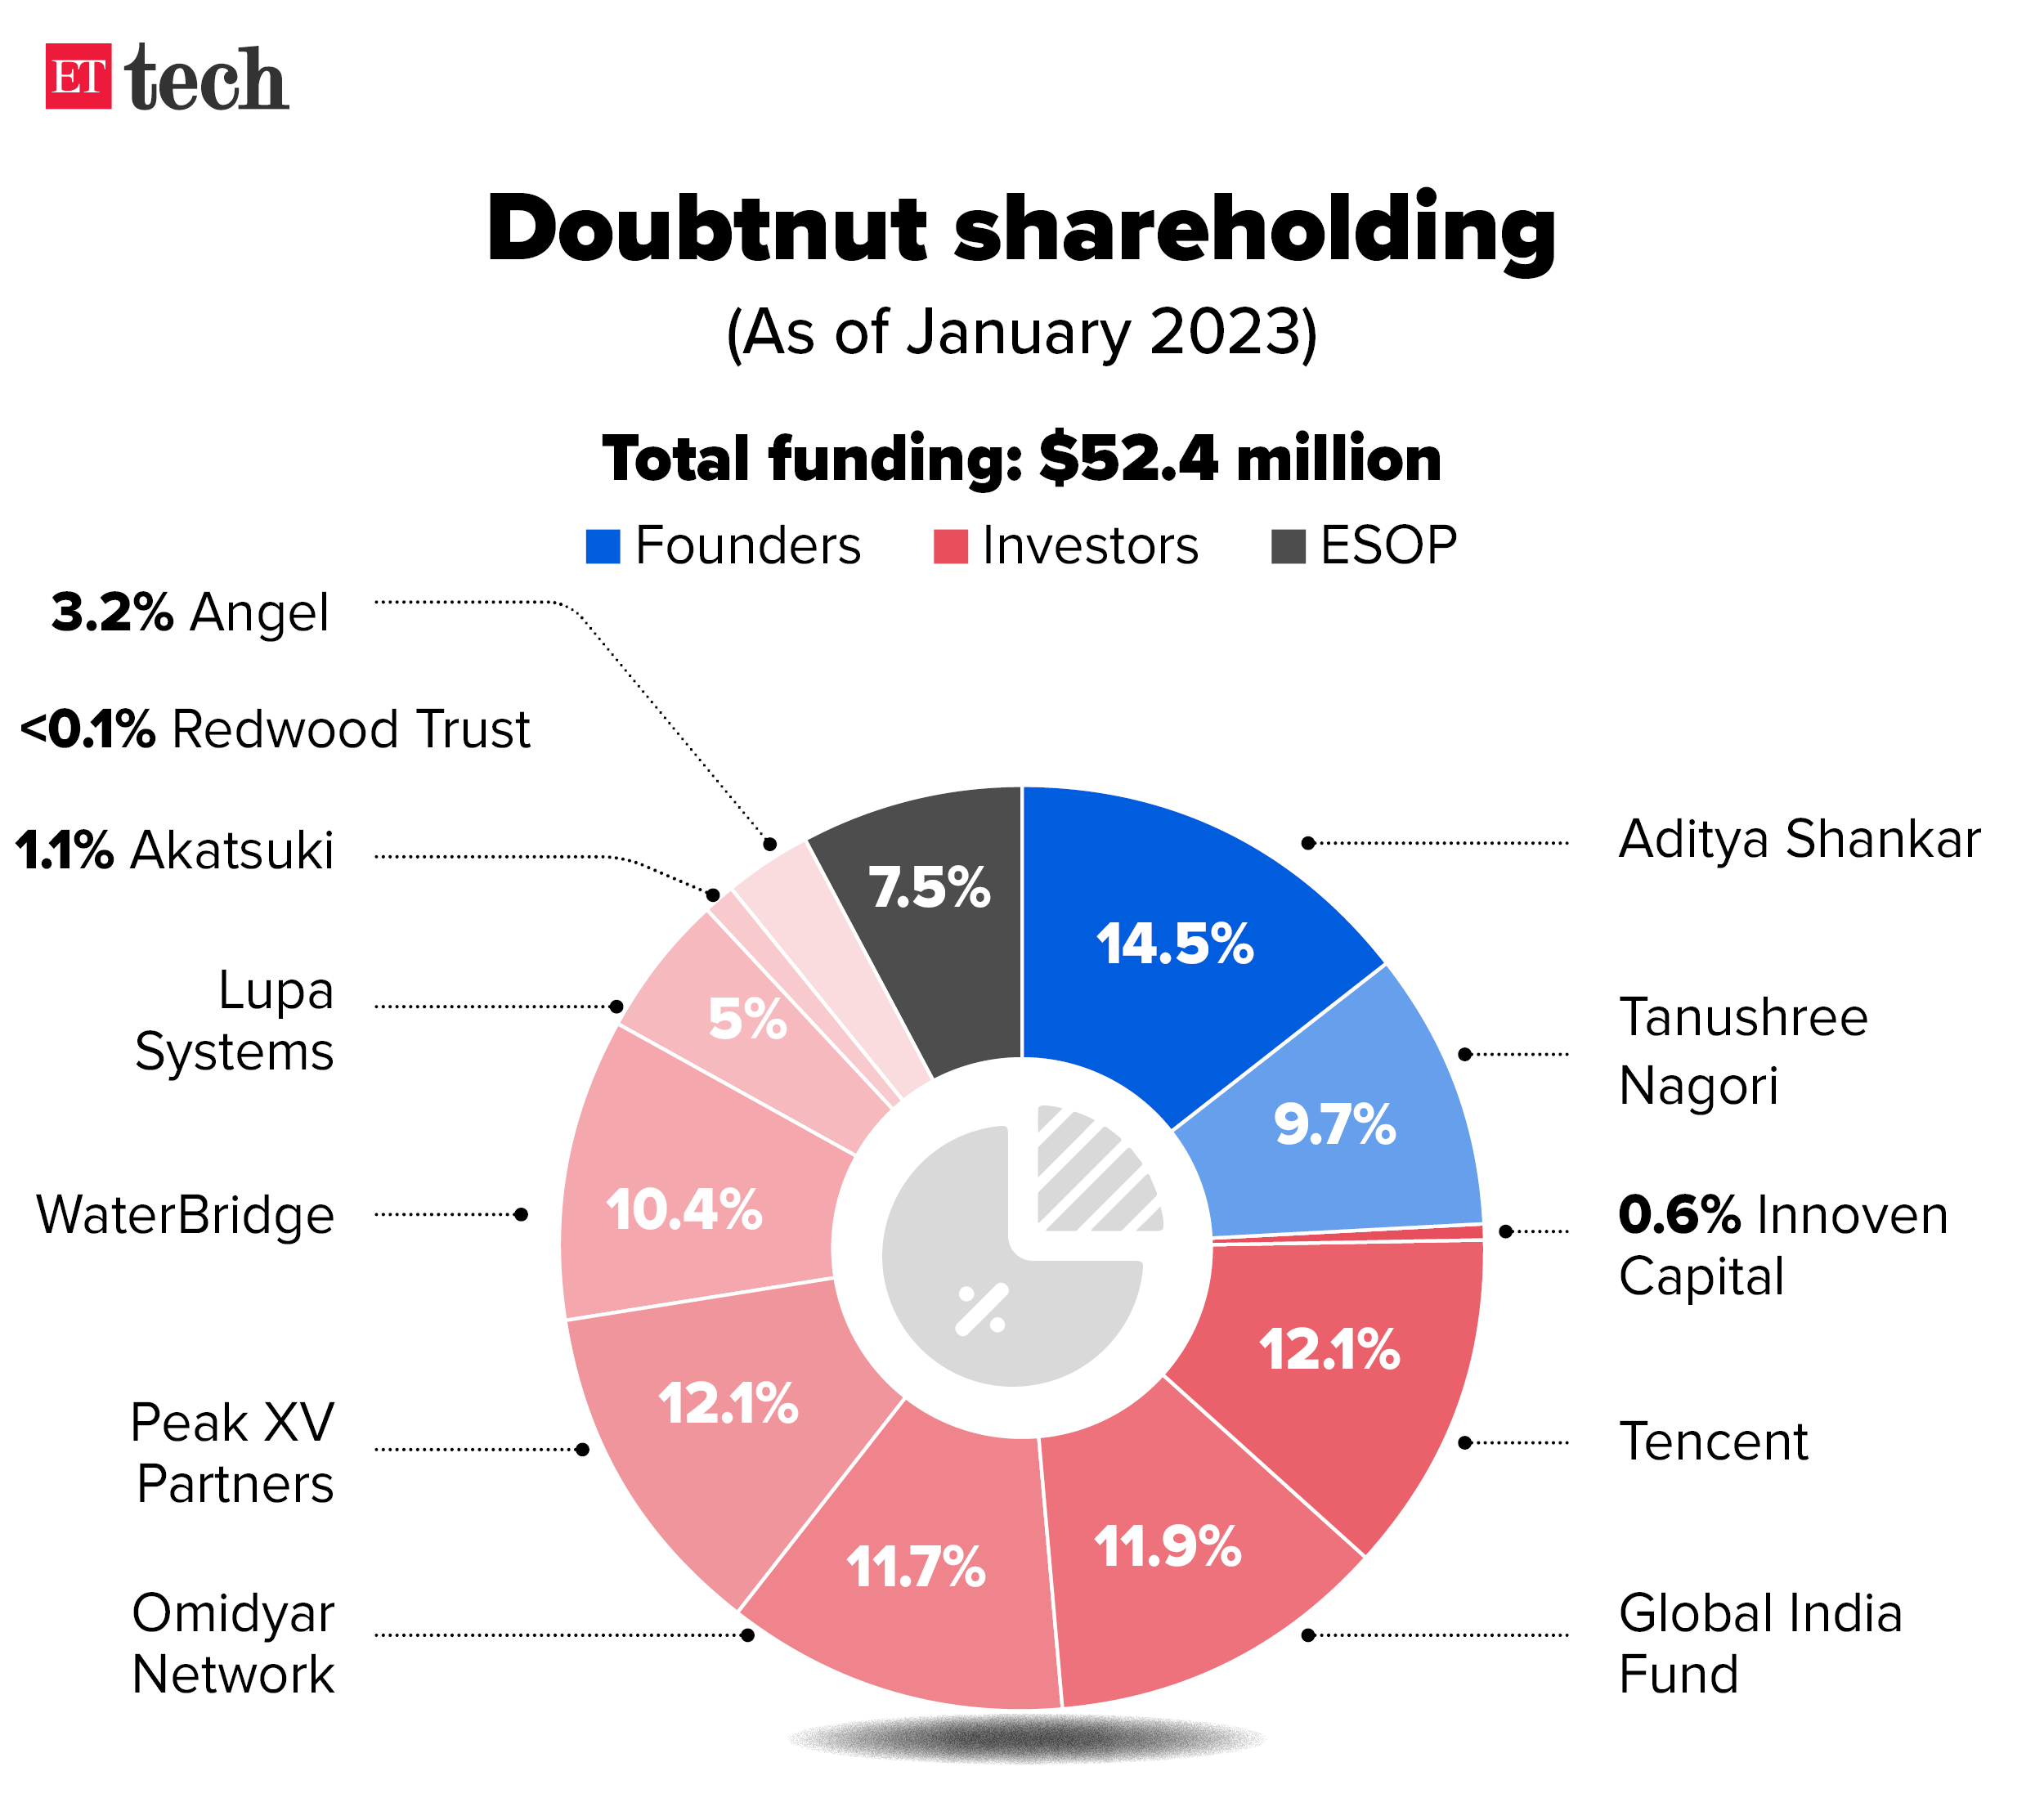 Doubtnut shareholding as of January